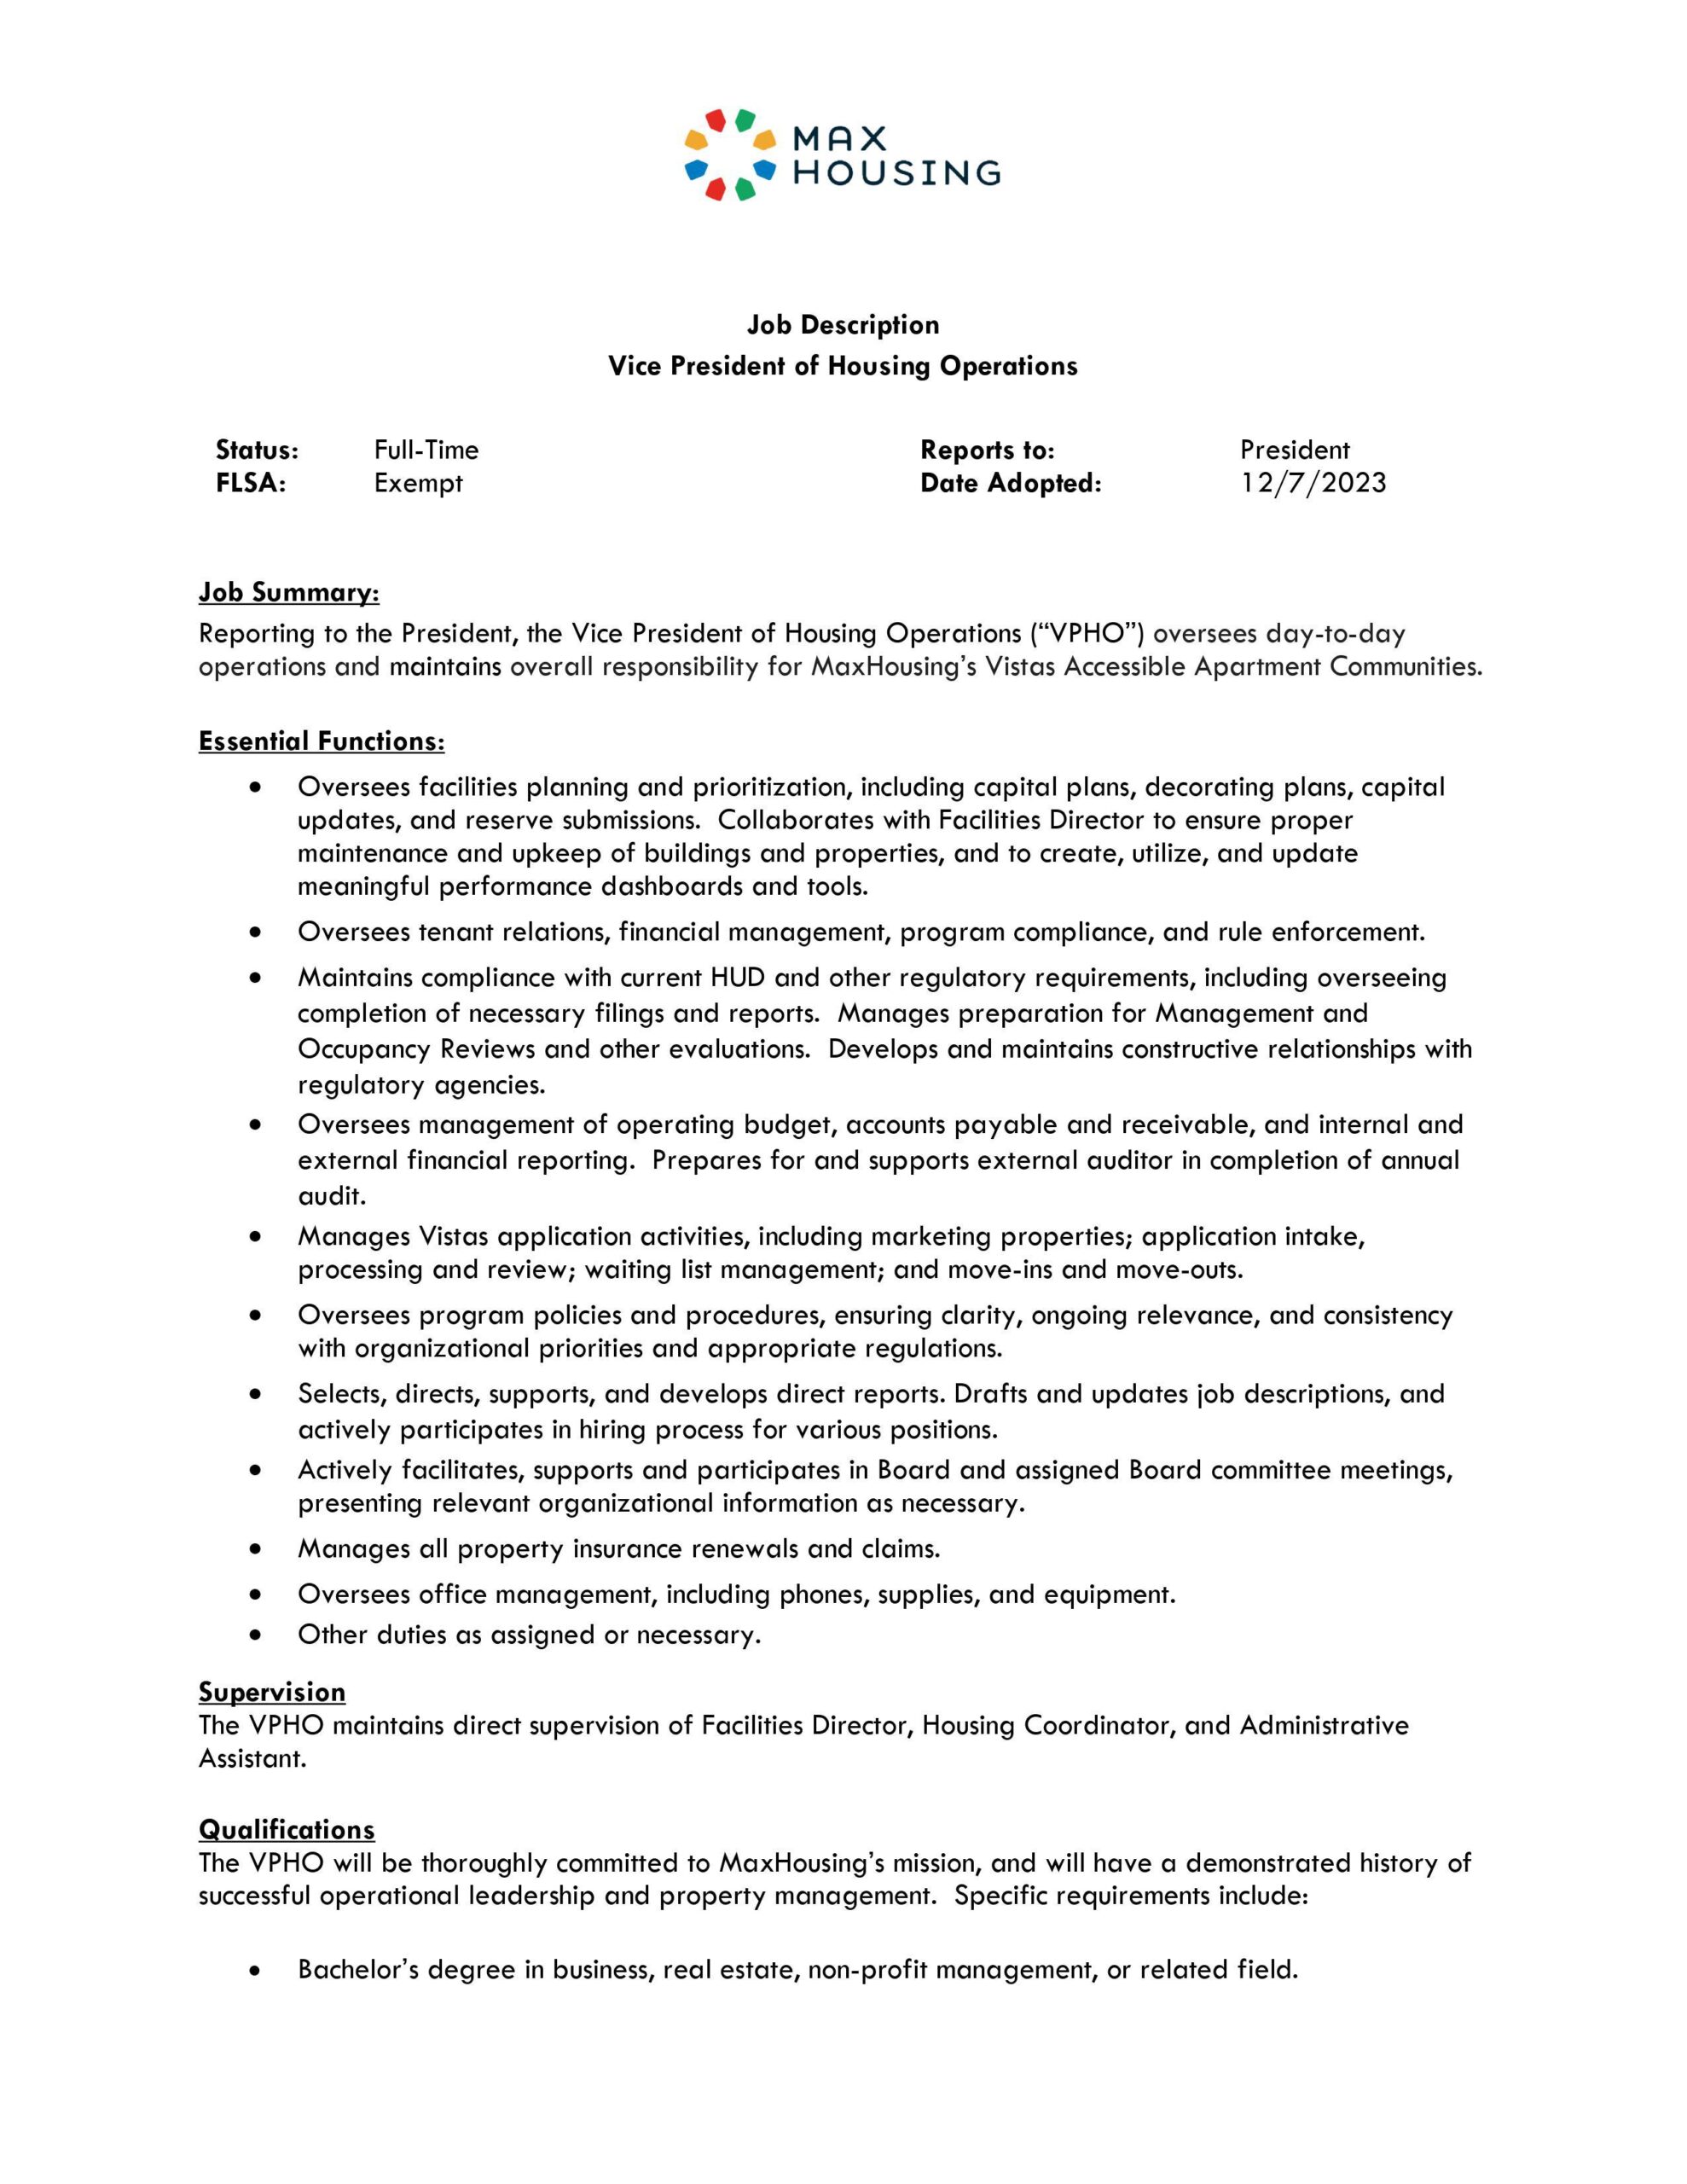 MaxHousing Vice President of Housing Ops Job Description.Final.12.07.23